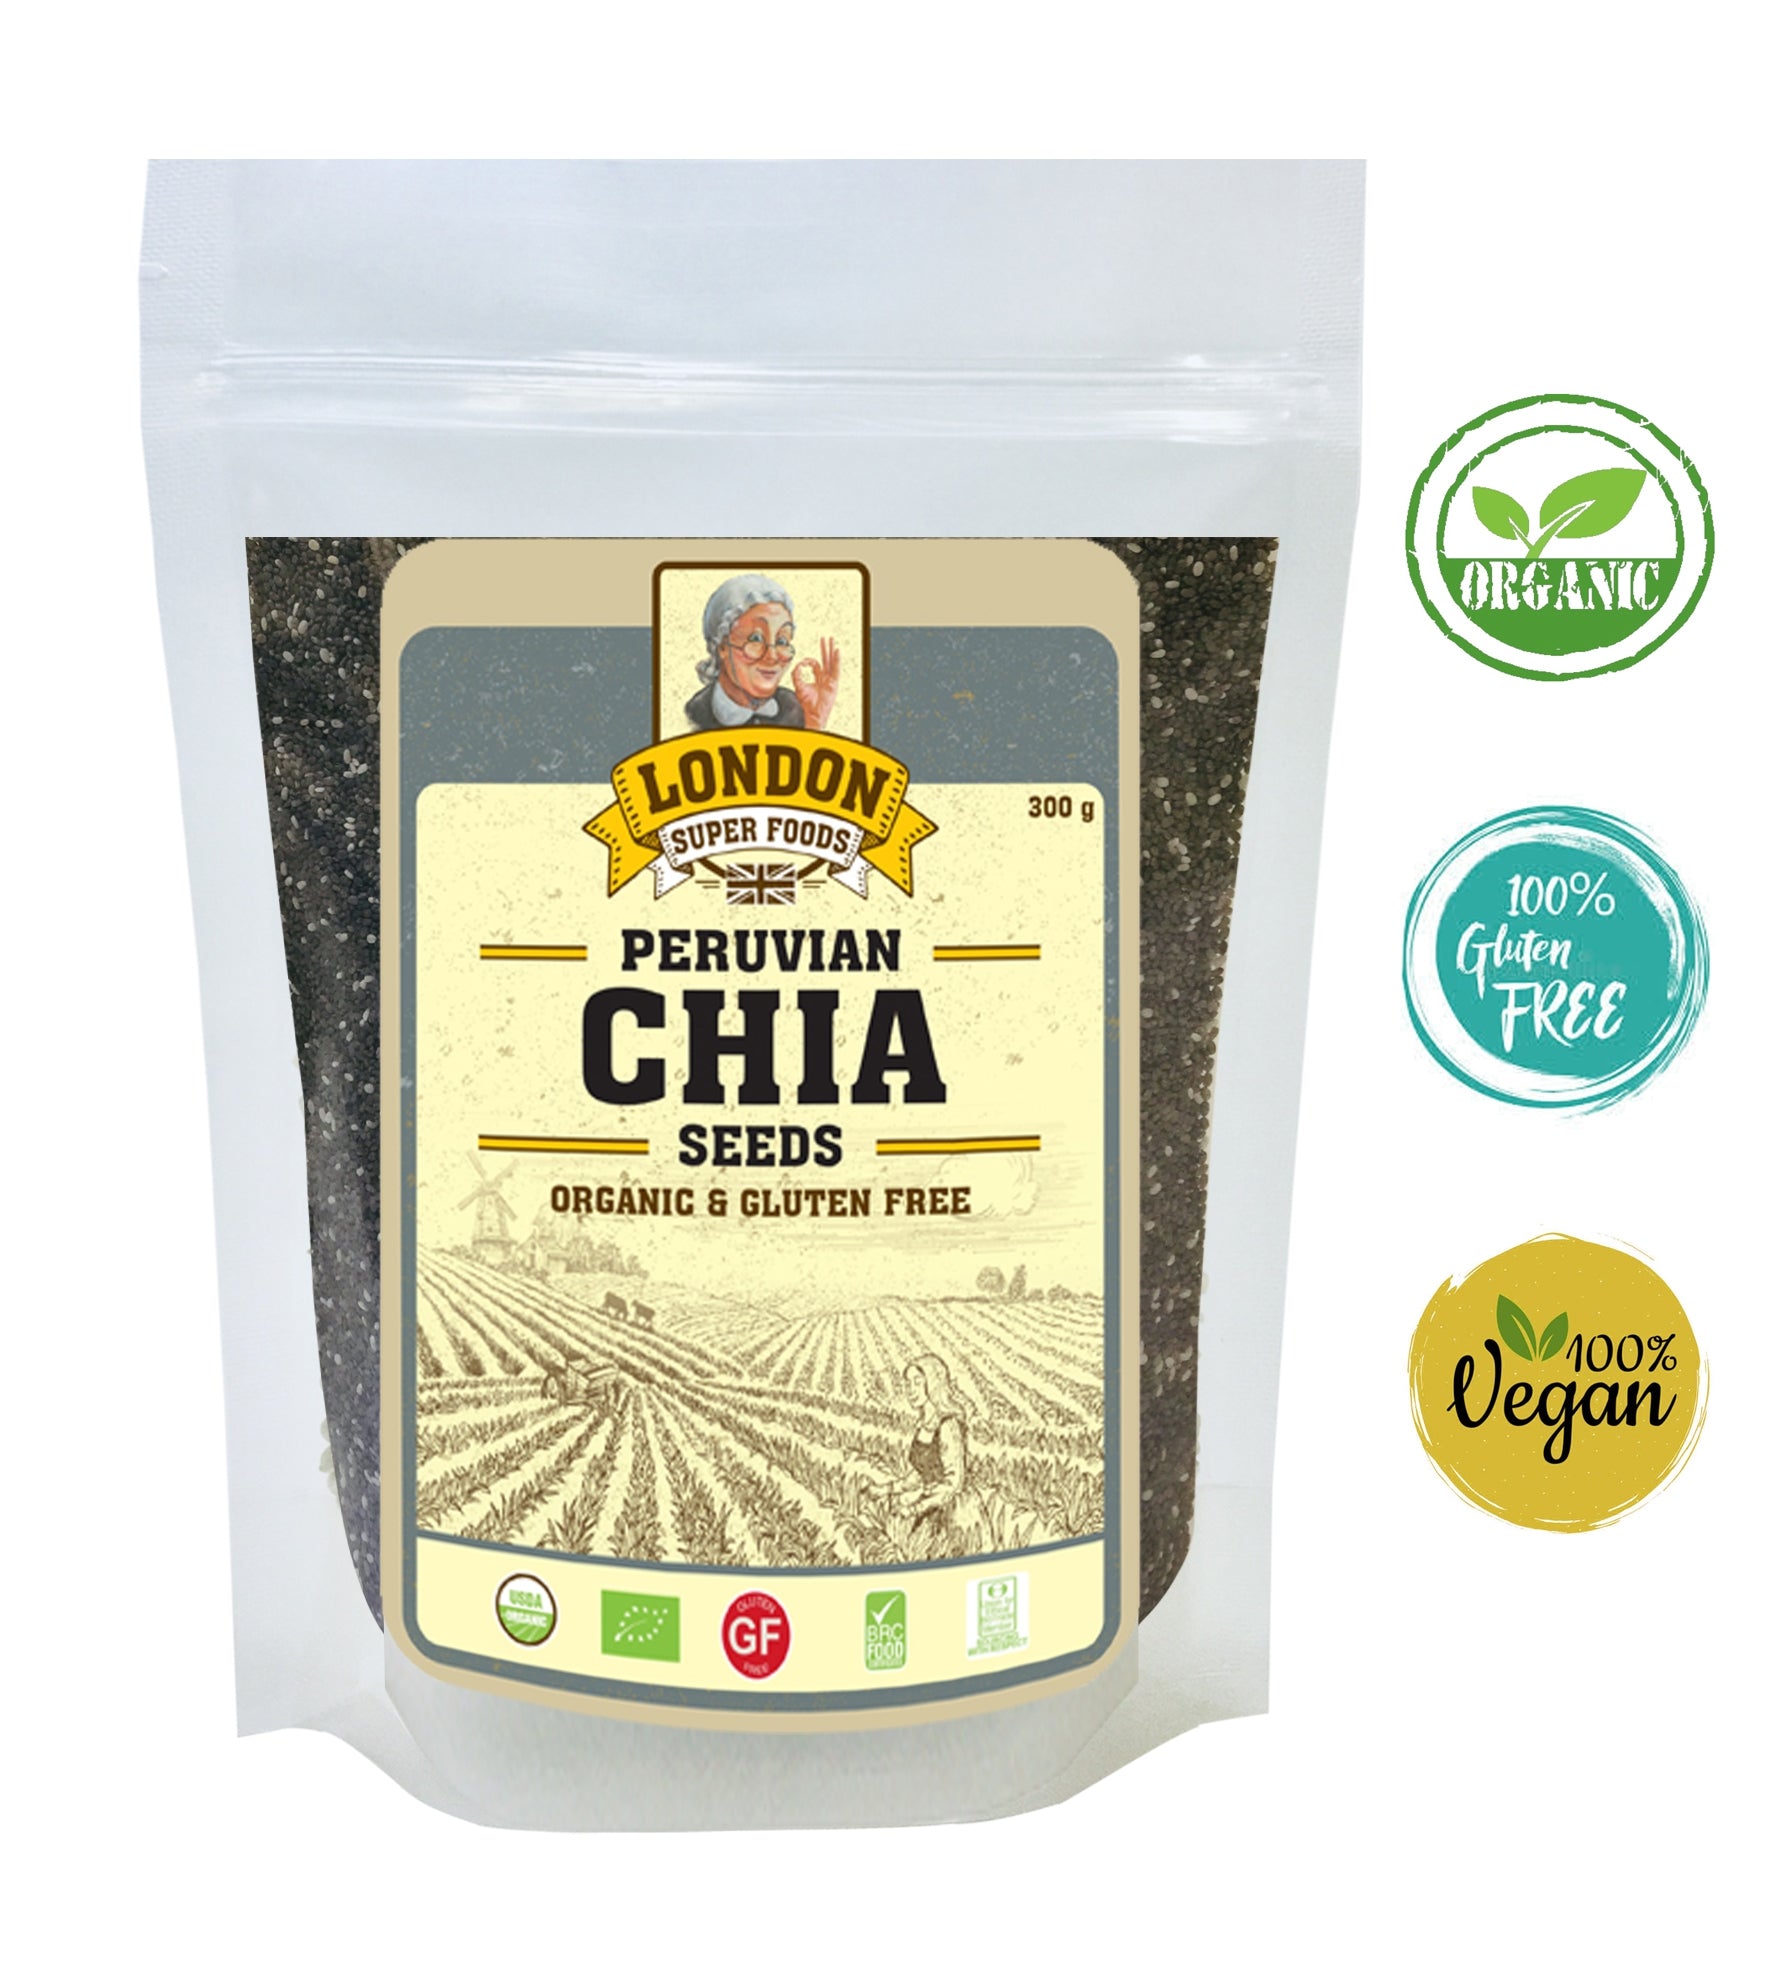 LONDON SUPER FOODS Organic Peruvian Chia Seeds, 300g- Gluten Free